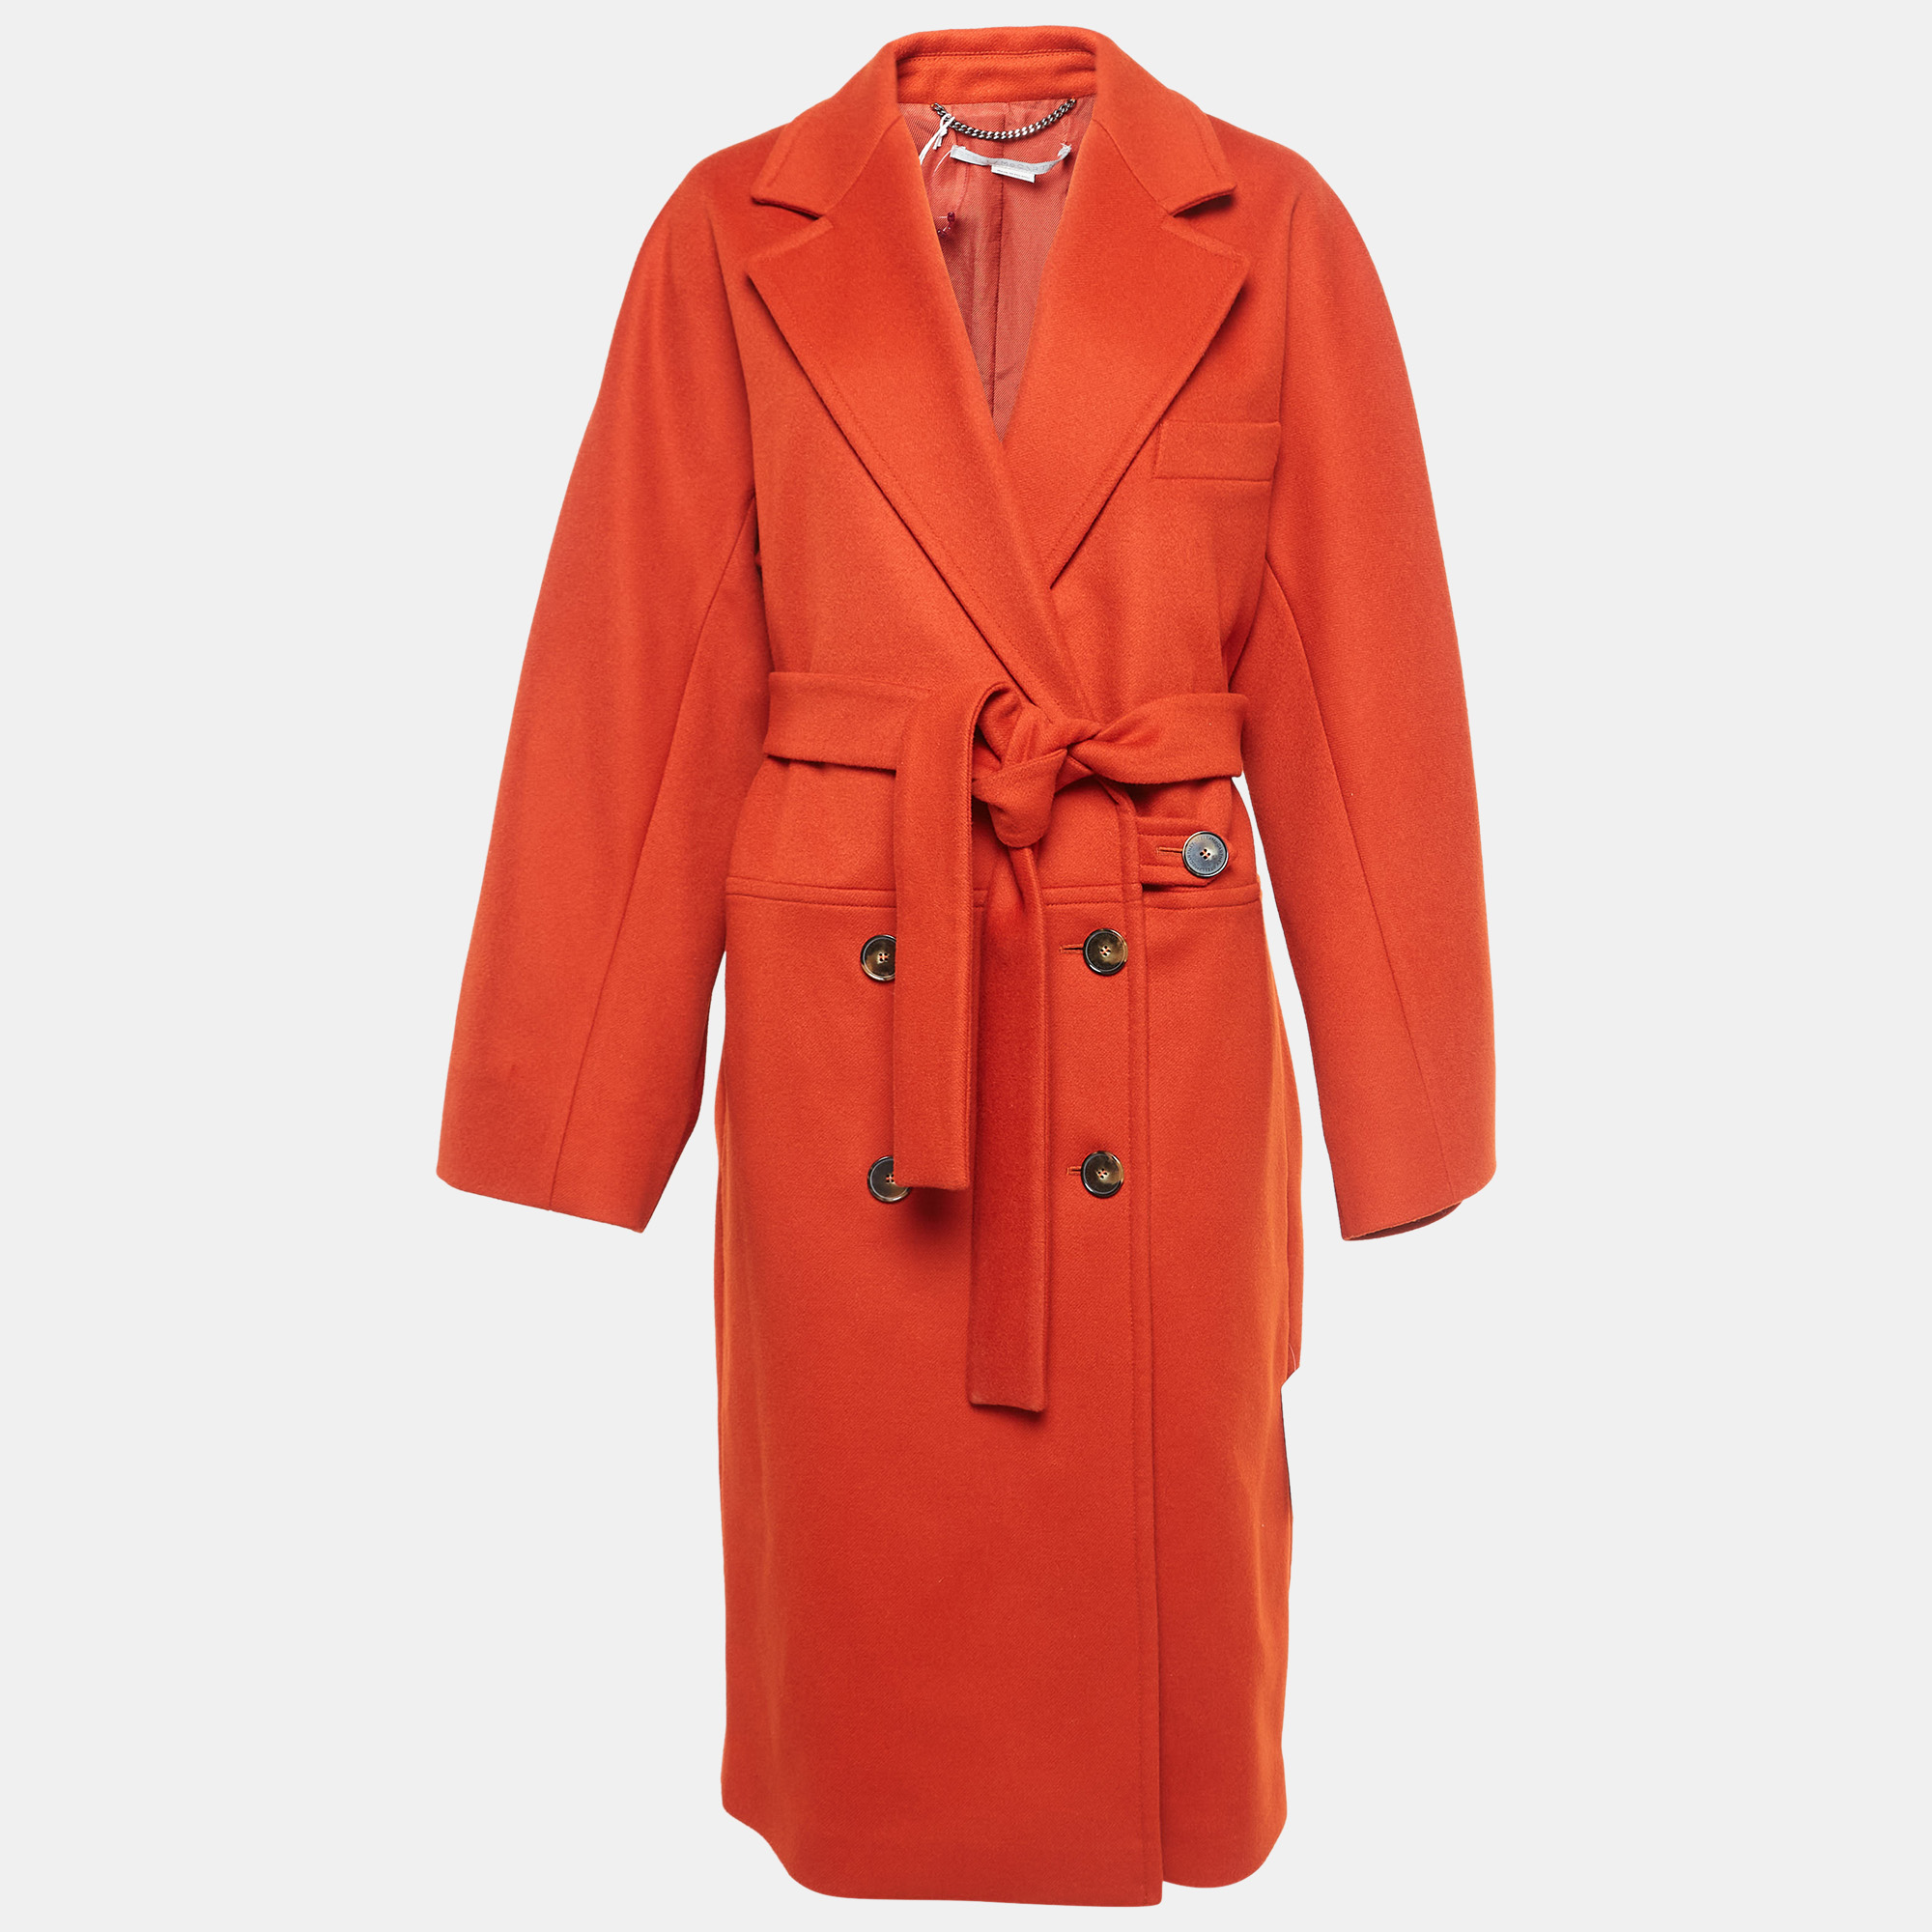 Stella mccartney orange wool double breasted trench coat s